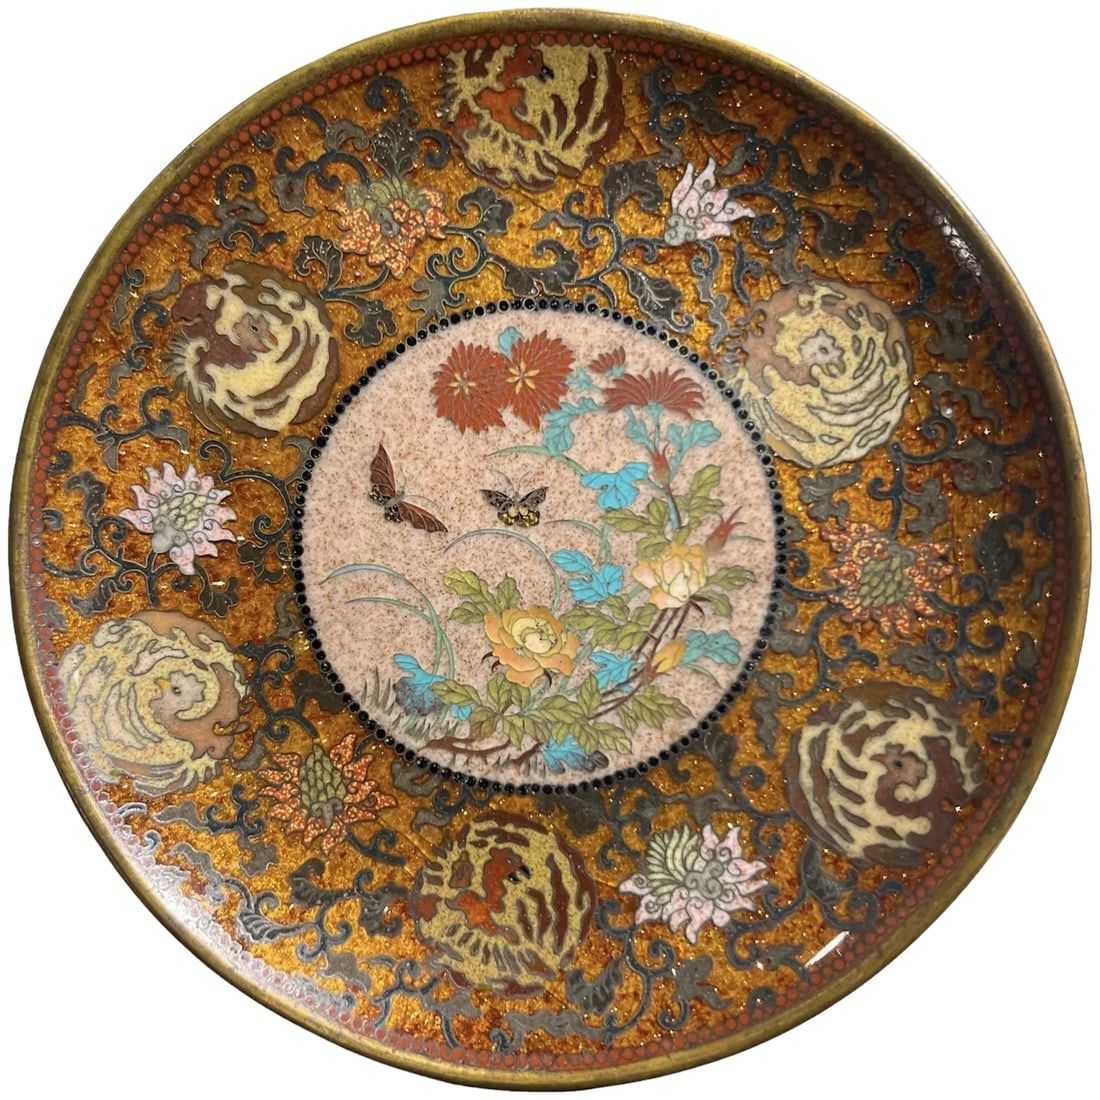 19th-century Japanese cloisonné plate attributed to Namikawa Yasuyuki, estimated at $7,000-$8,000 at Jasper52.